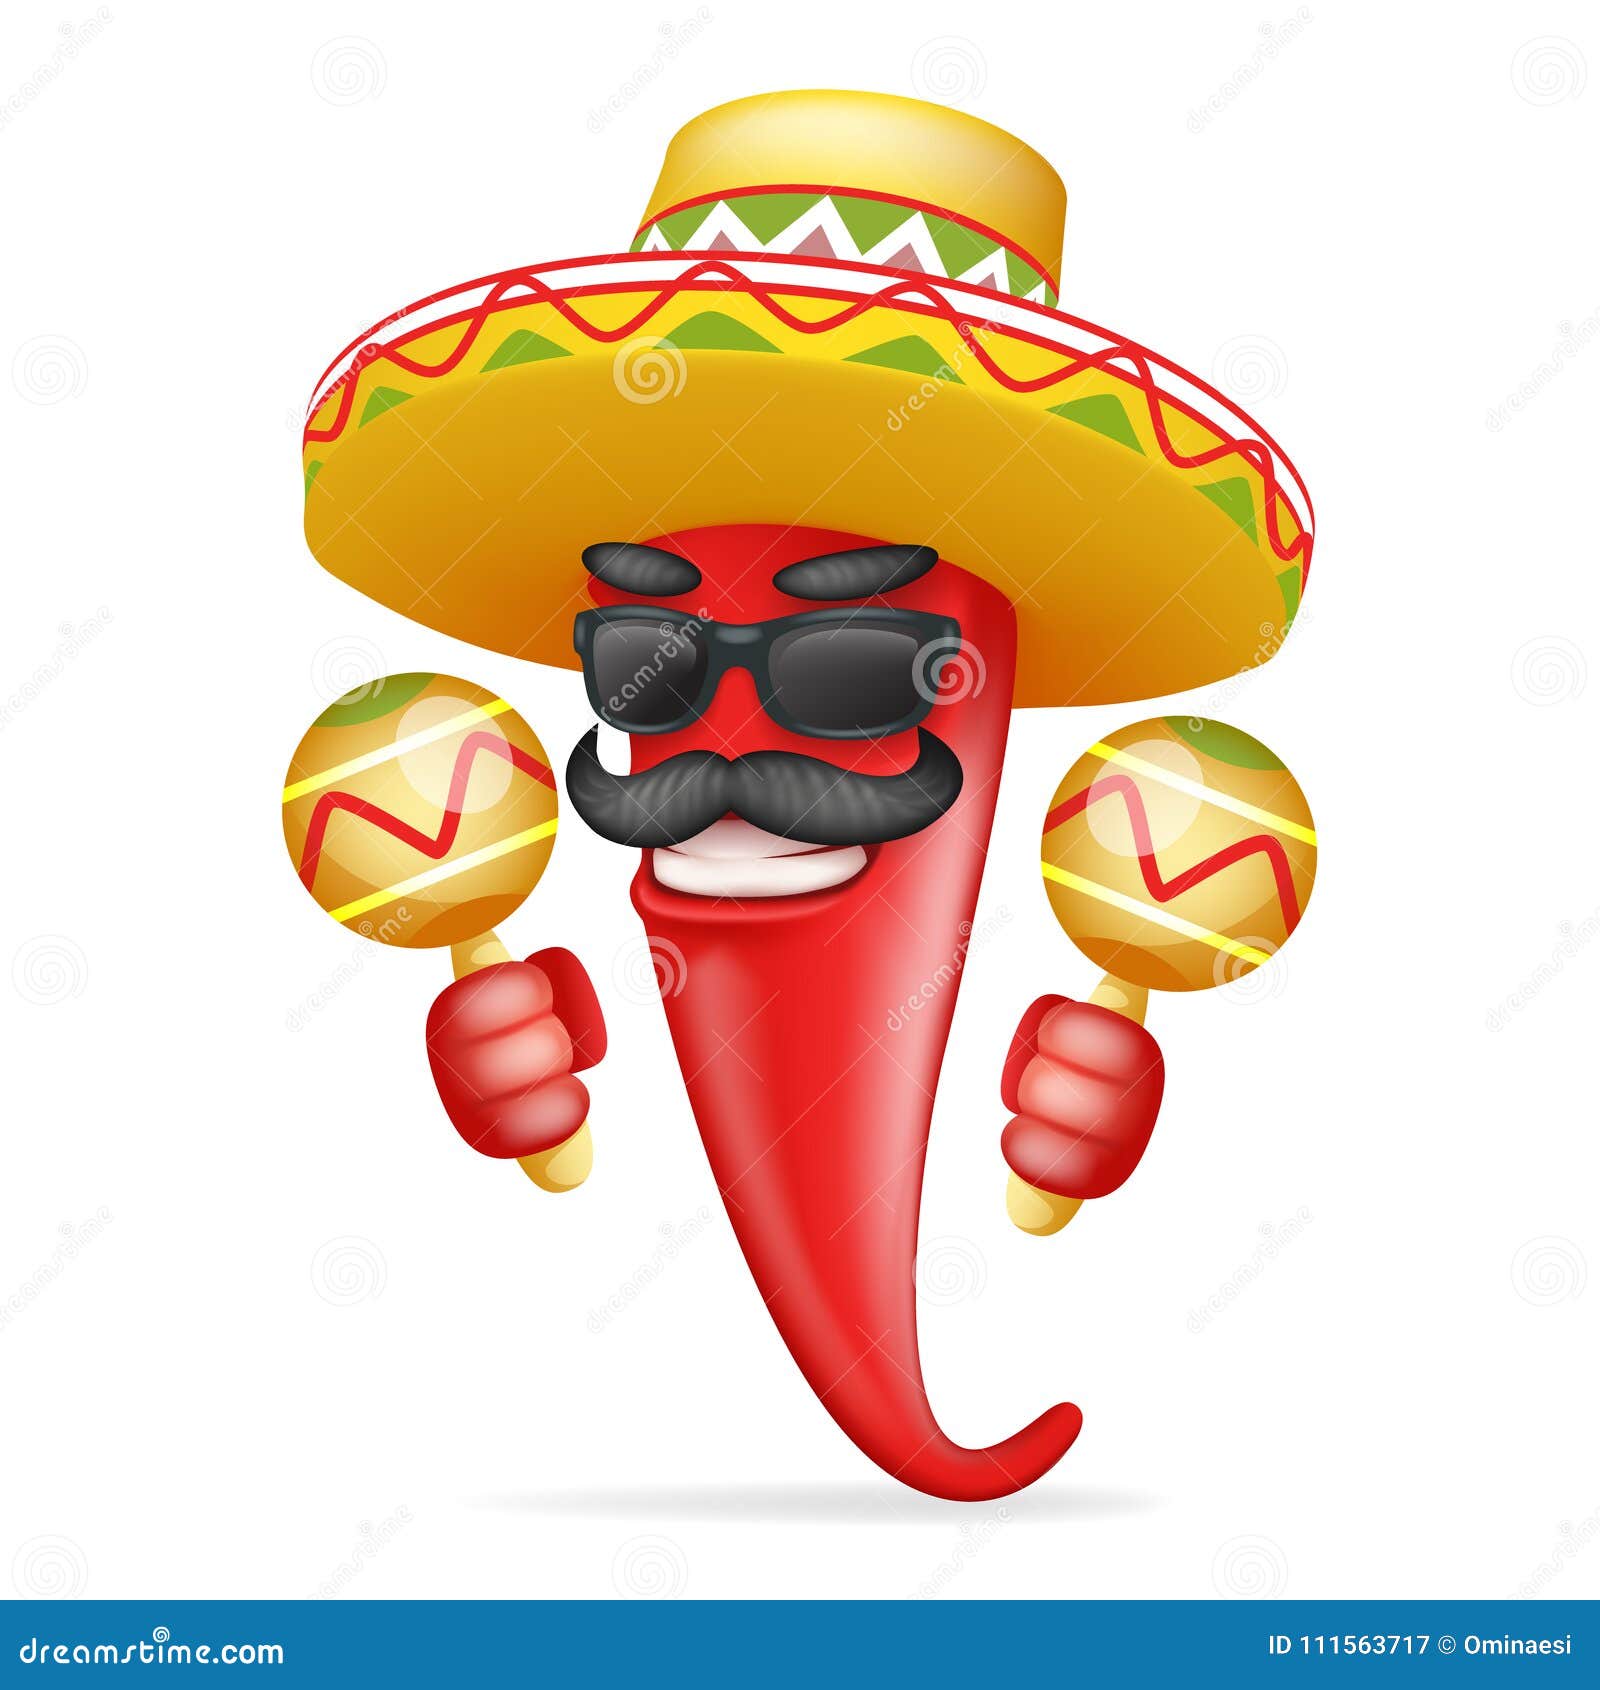 latin maraca mexican hat red cool hot chili pepper sunglasses mustache happy character realistic 3d cartoon 